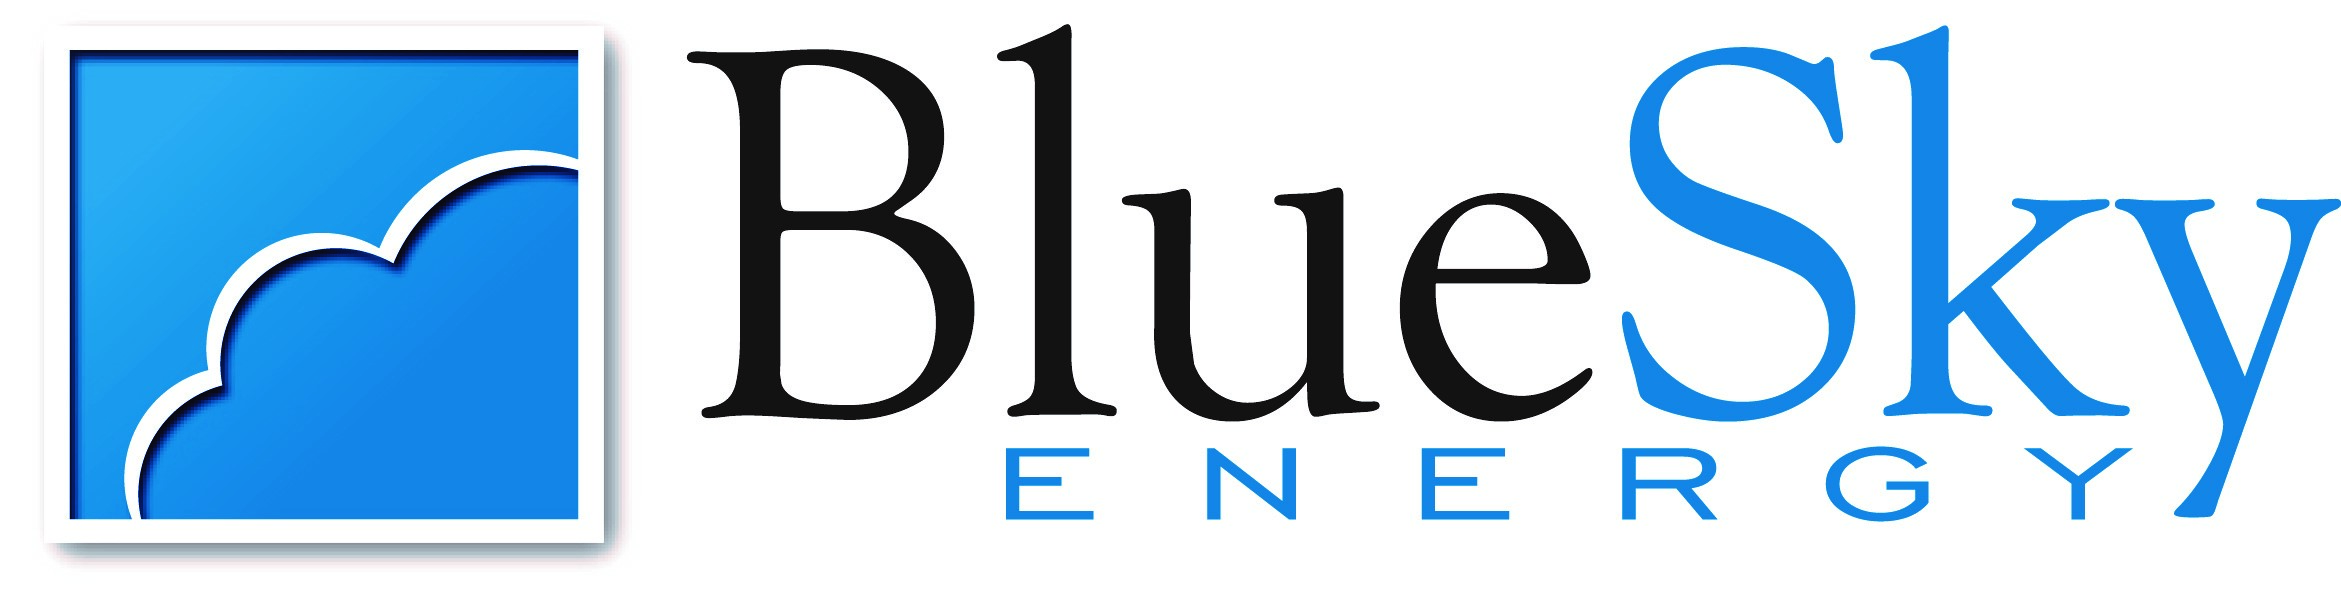 Blue Sky Utility Company Profile: Valuation, Investors, Acquisition